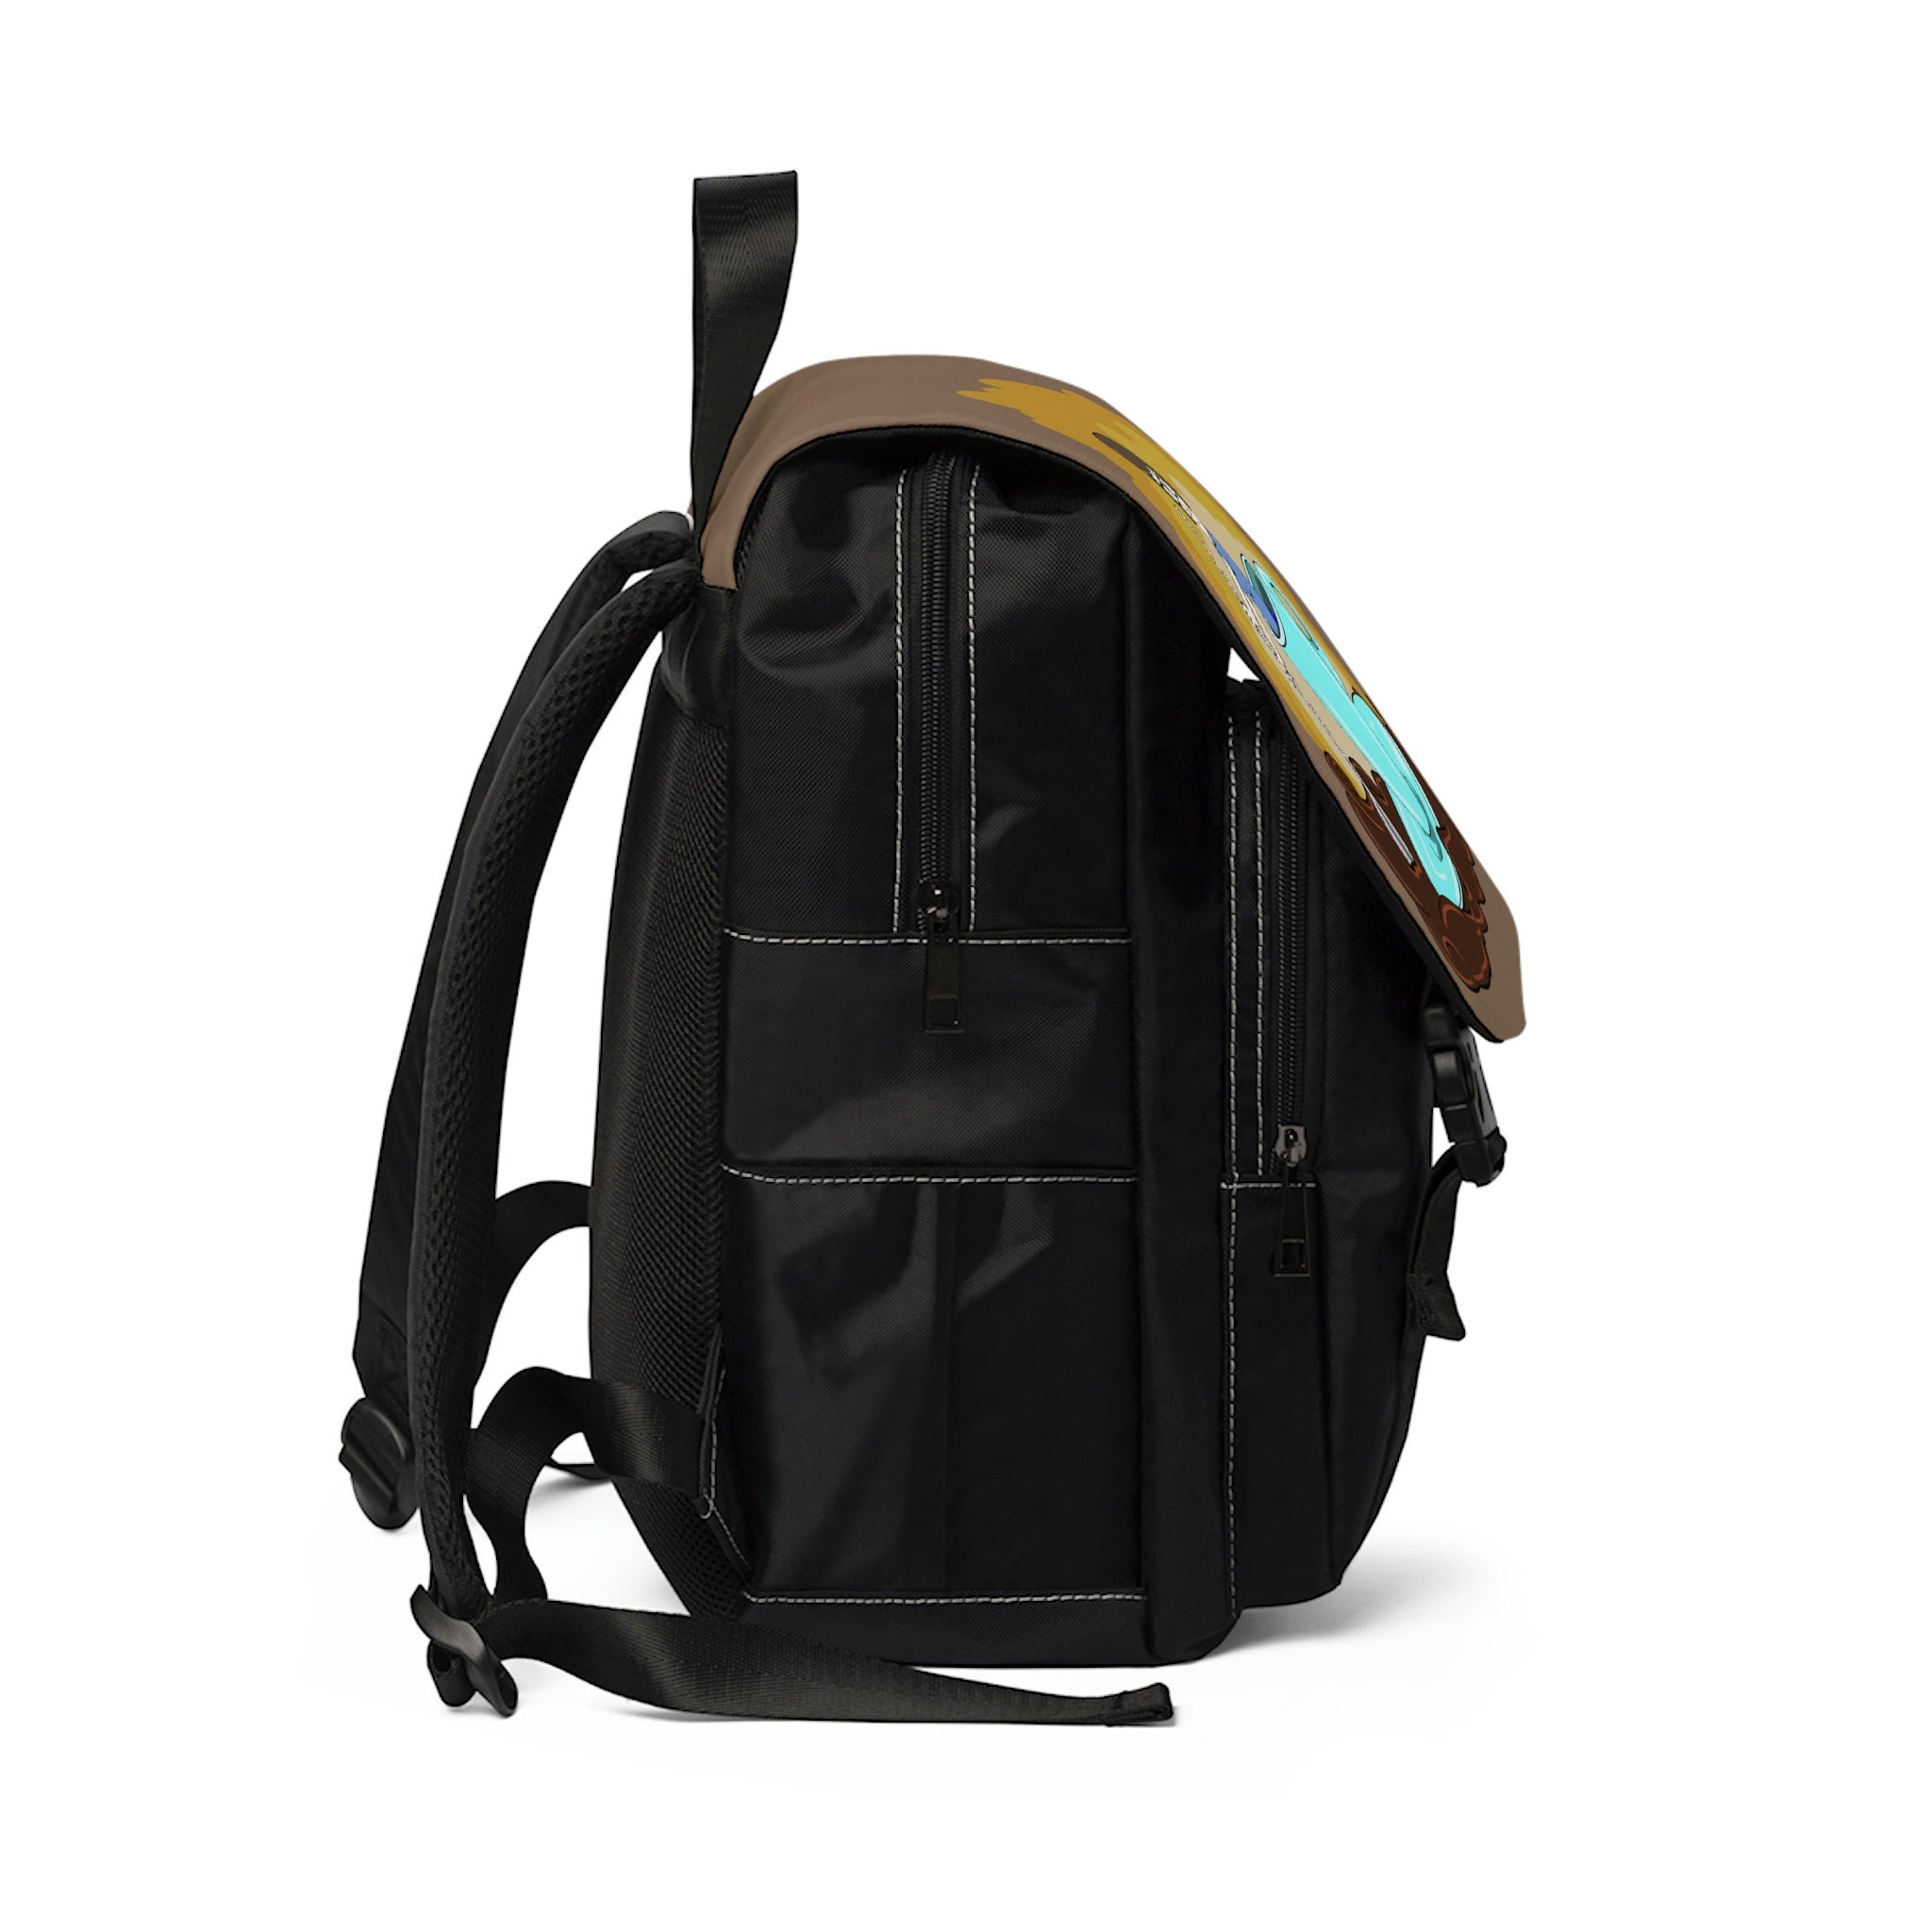 Espresso Tina backpack, Bob's Burgers, Unisex Casual Shoulder Backpack